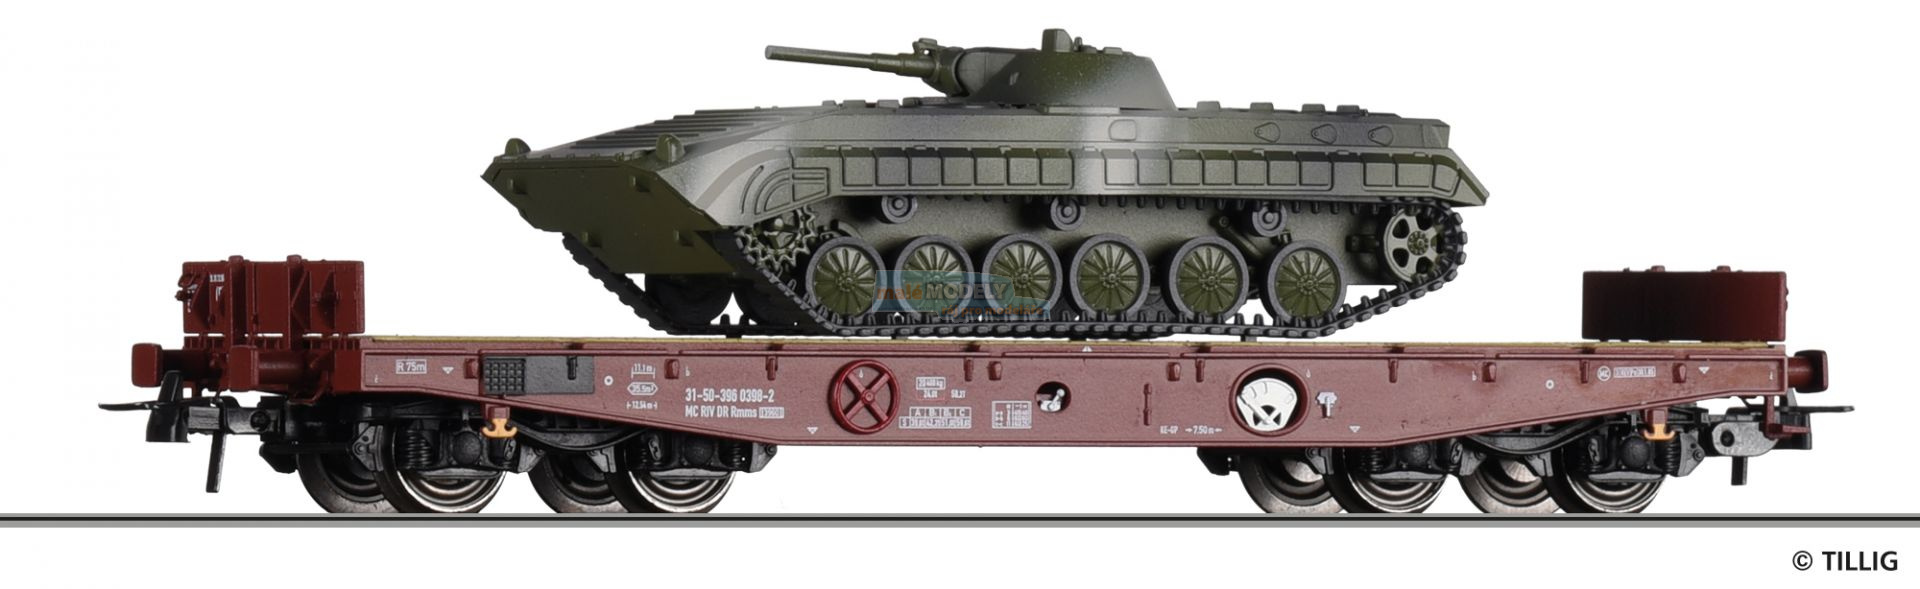 Plošinový vůz ložený tankem Panzer BMP-1, DR, IV